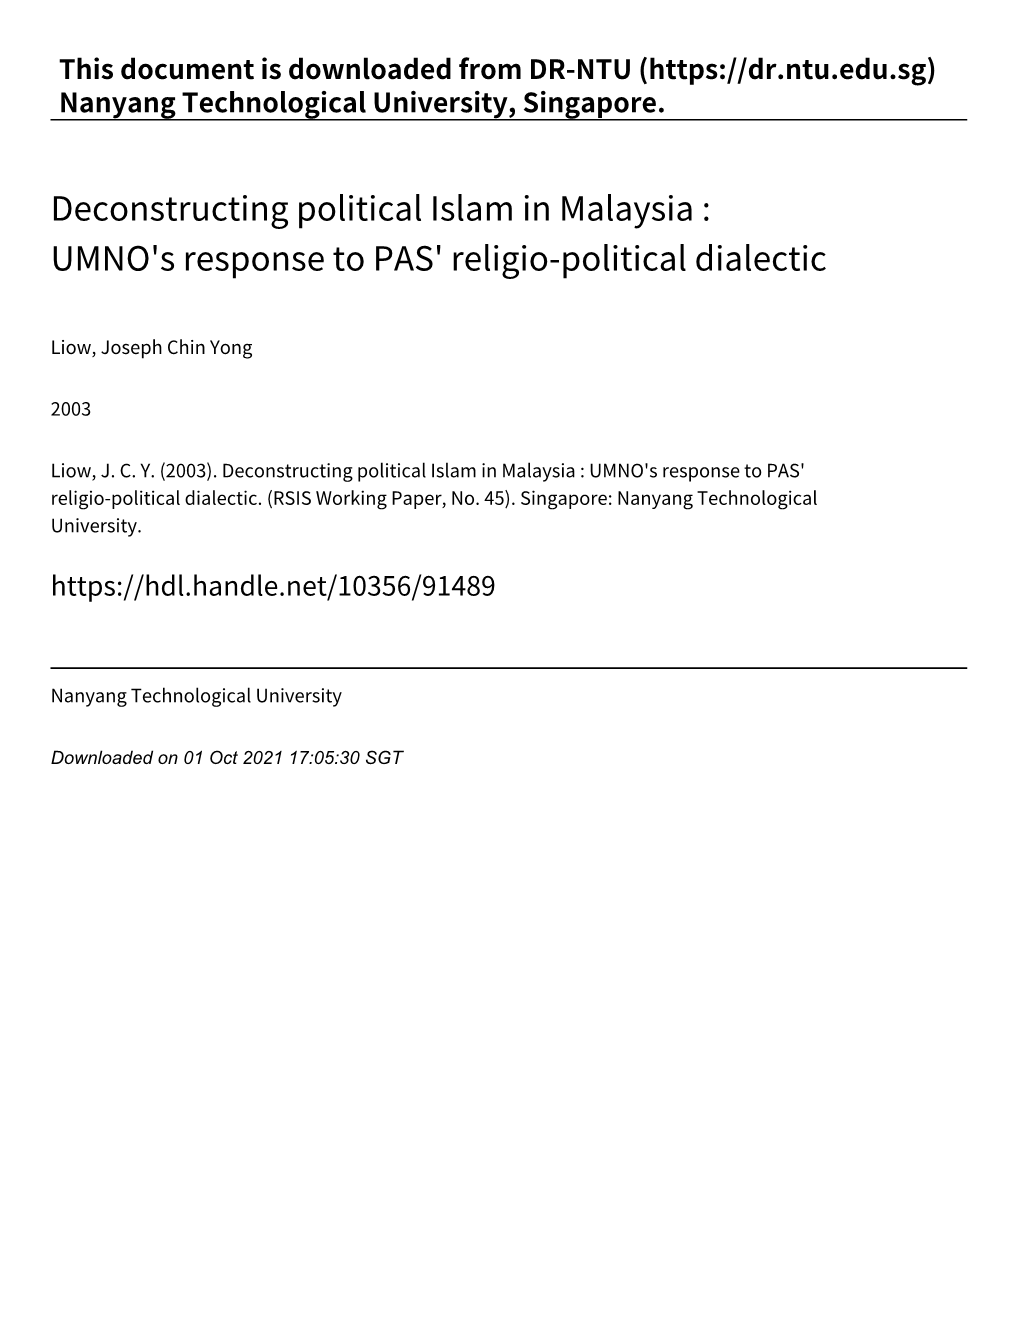 Deconstructing Political Islam in Malaysia : UMNO's Response to PAS' Religio‑Political Dialectic